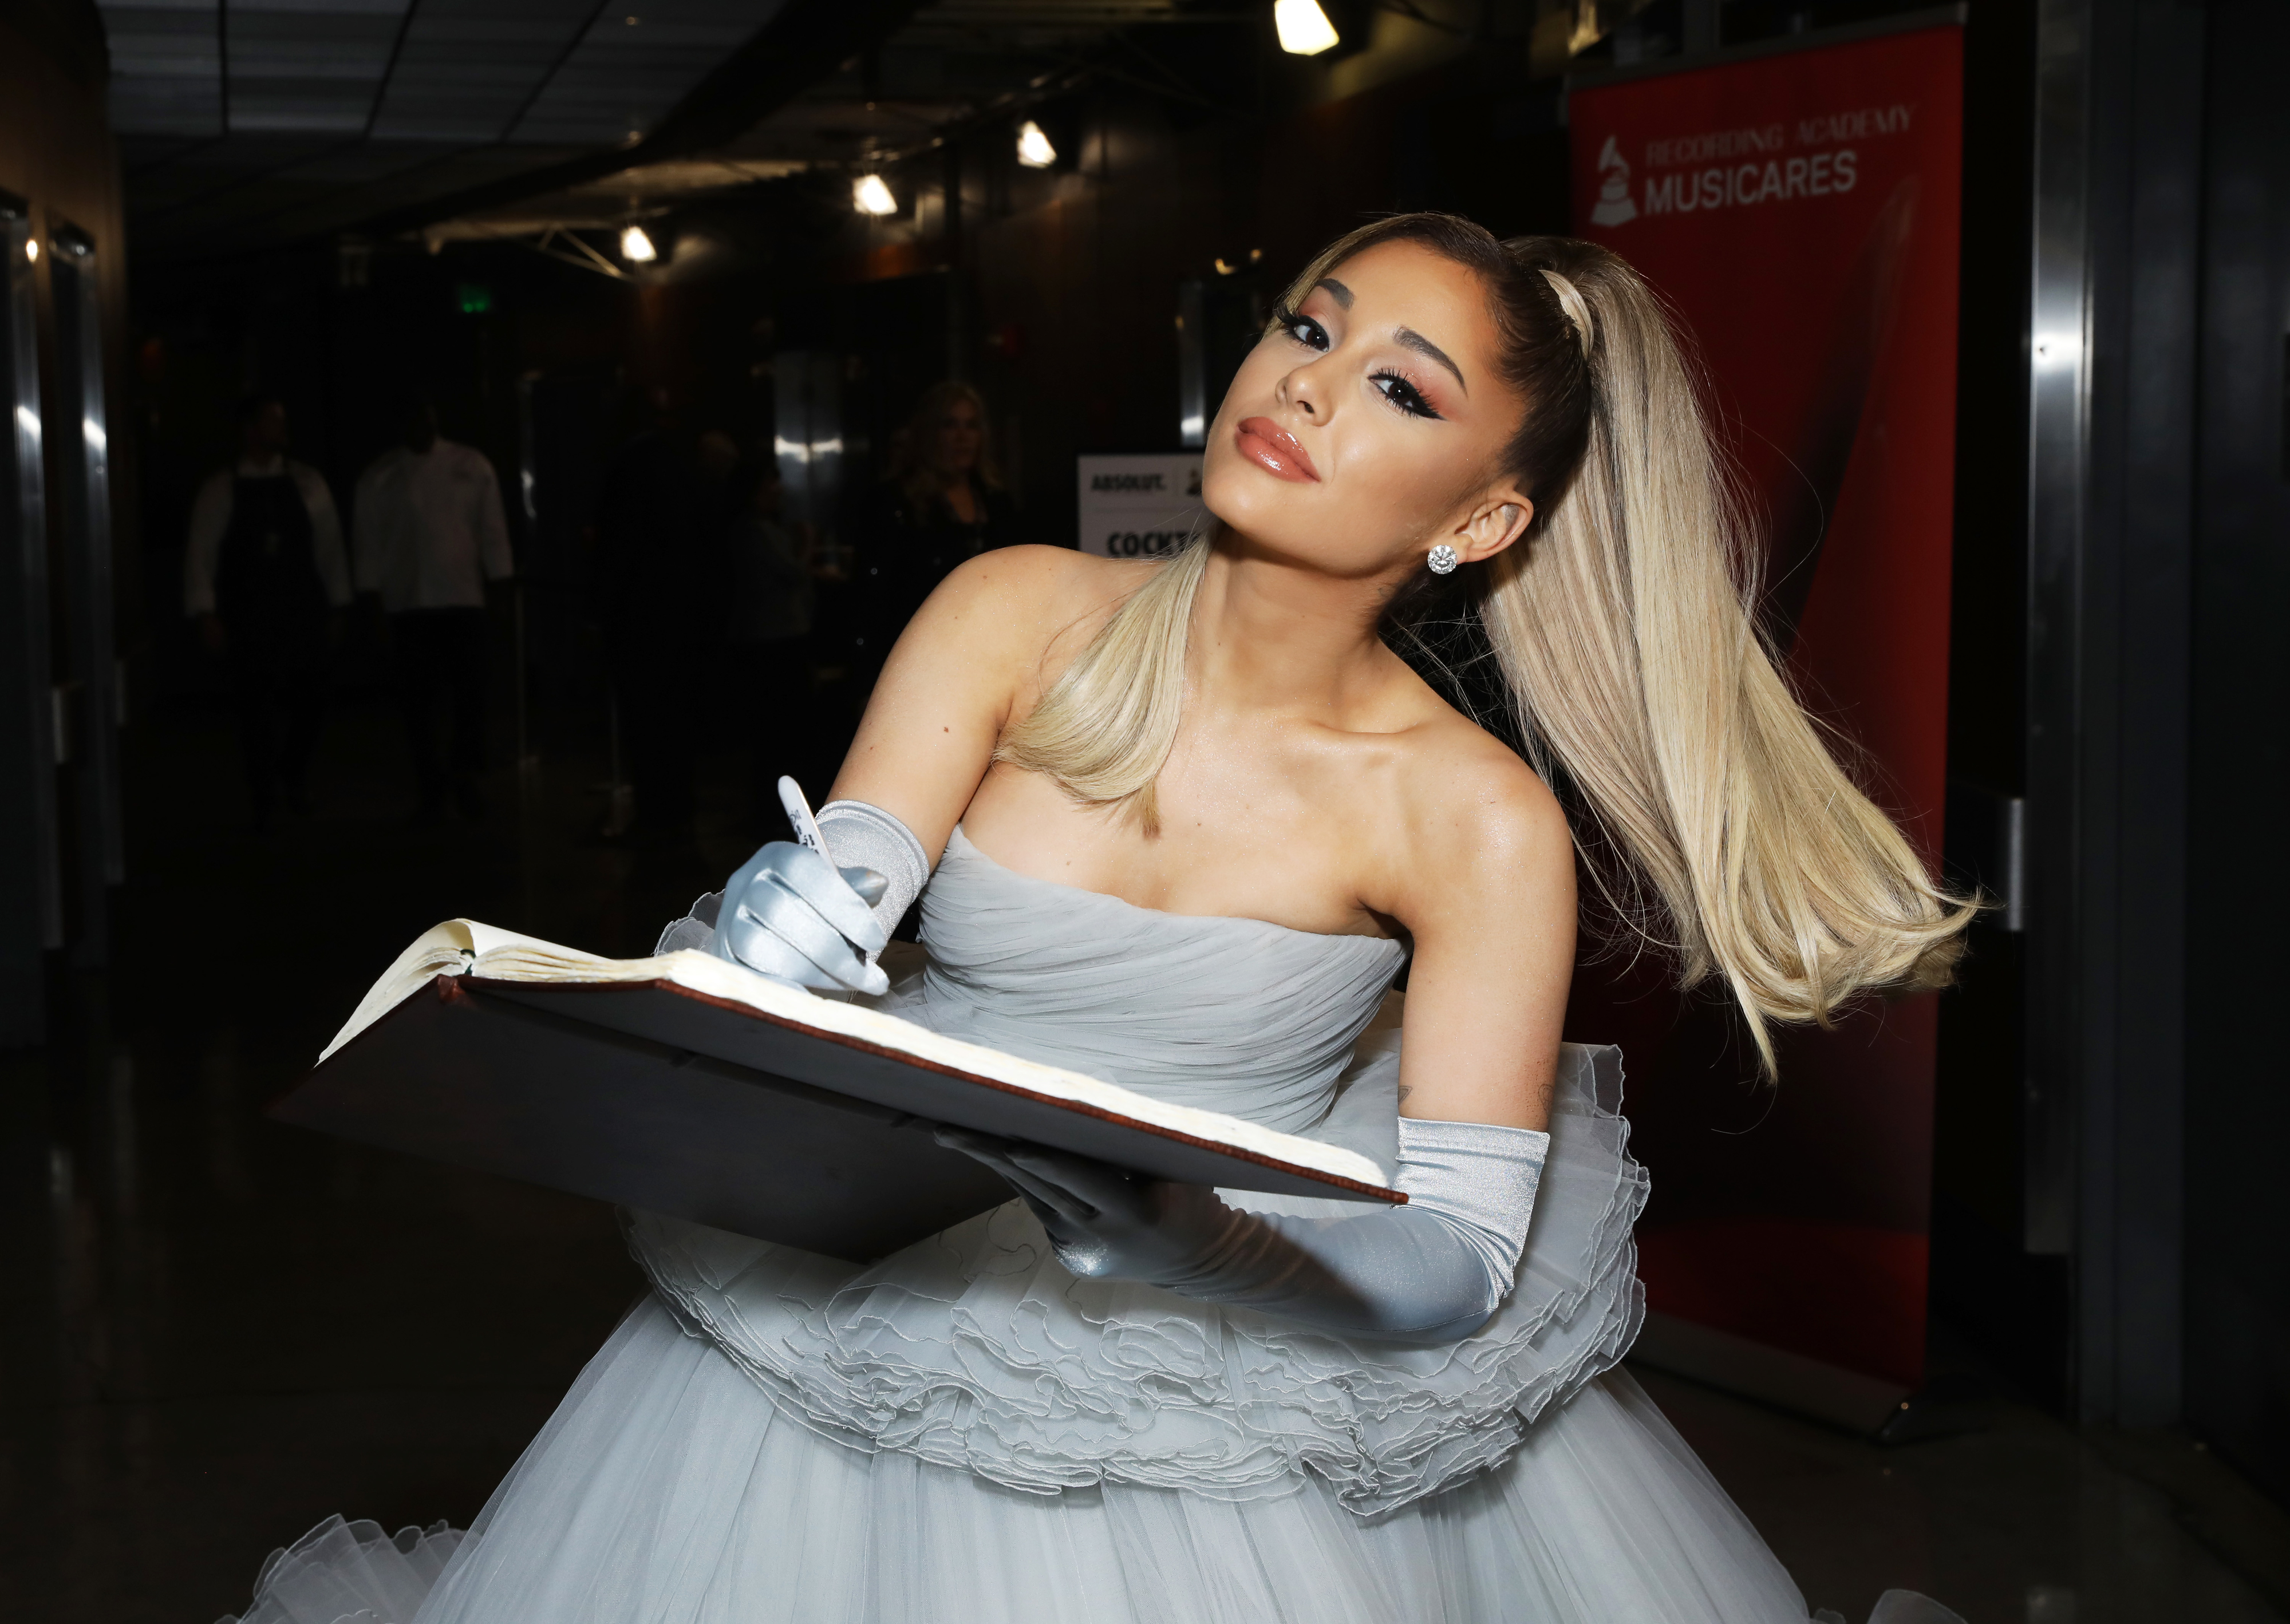 Close-up of Ariana signing a book